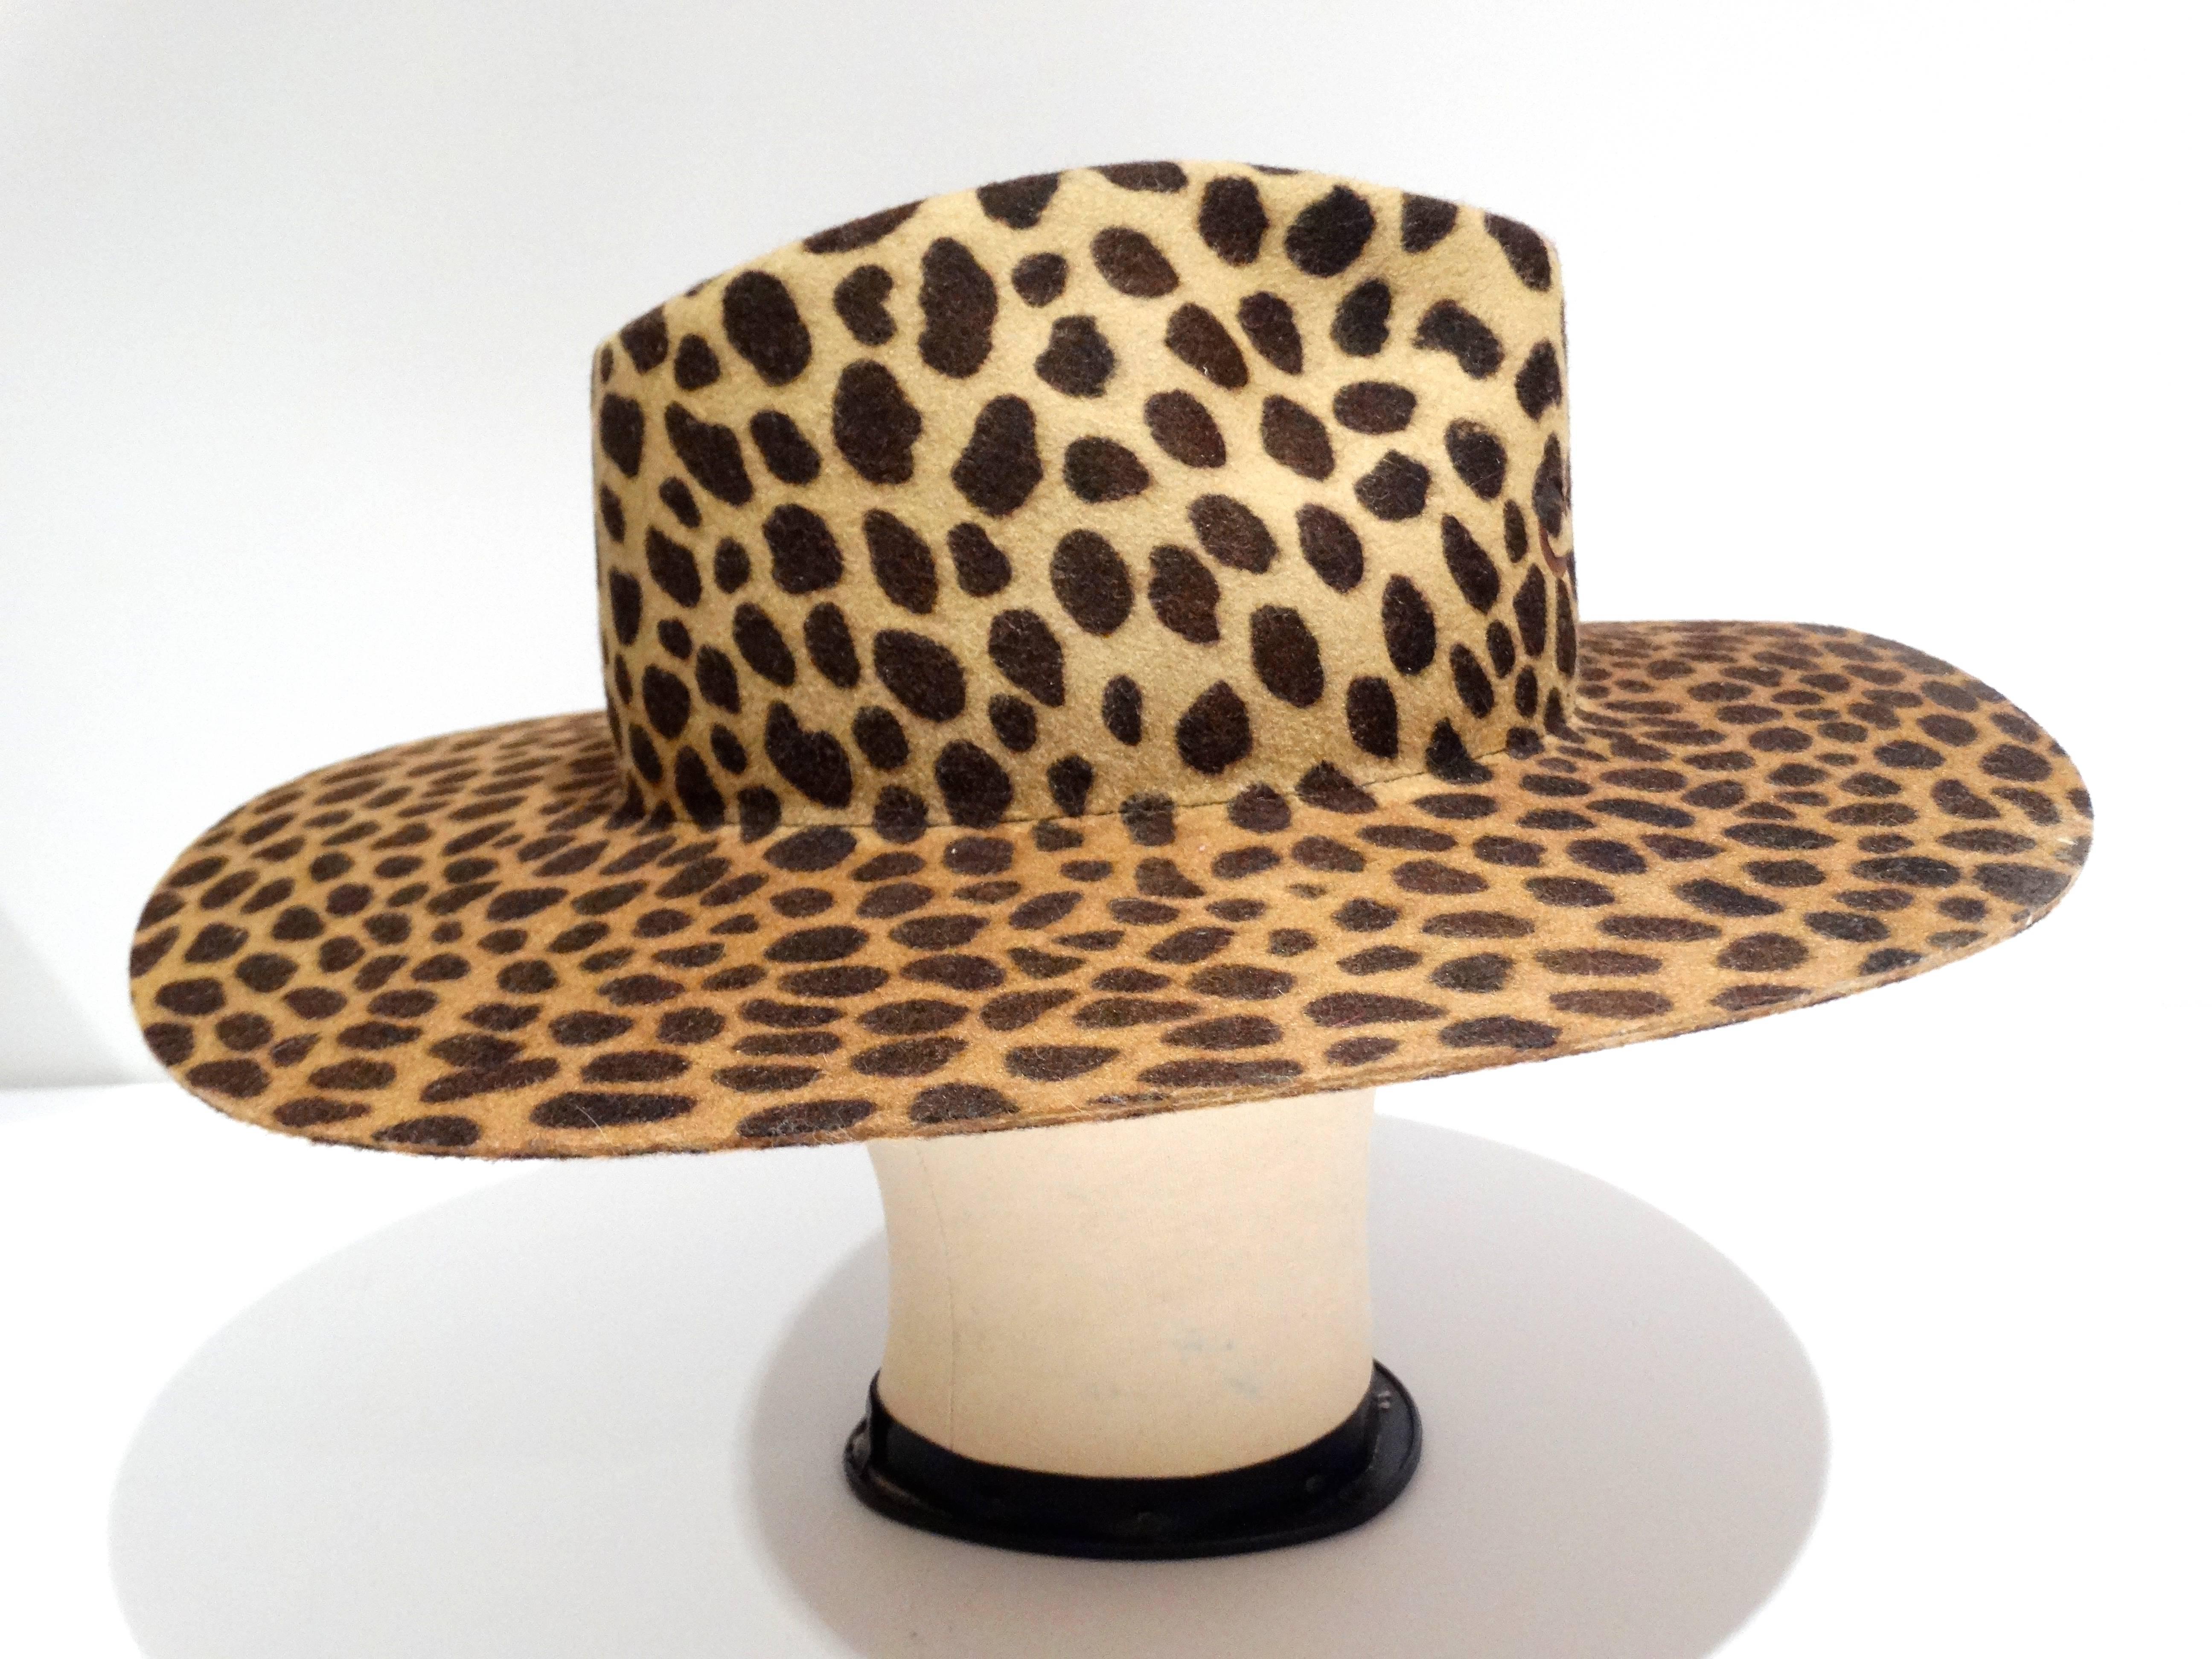 1980's Leopard felt hat created by Charlie 1 Horse Hat Company.  Two-tone leopard print in a bohemian style hat shape. Size 7 100%wool felt 